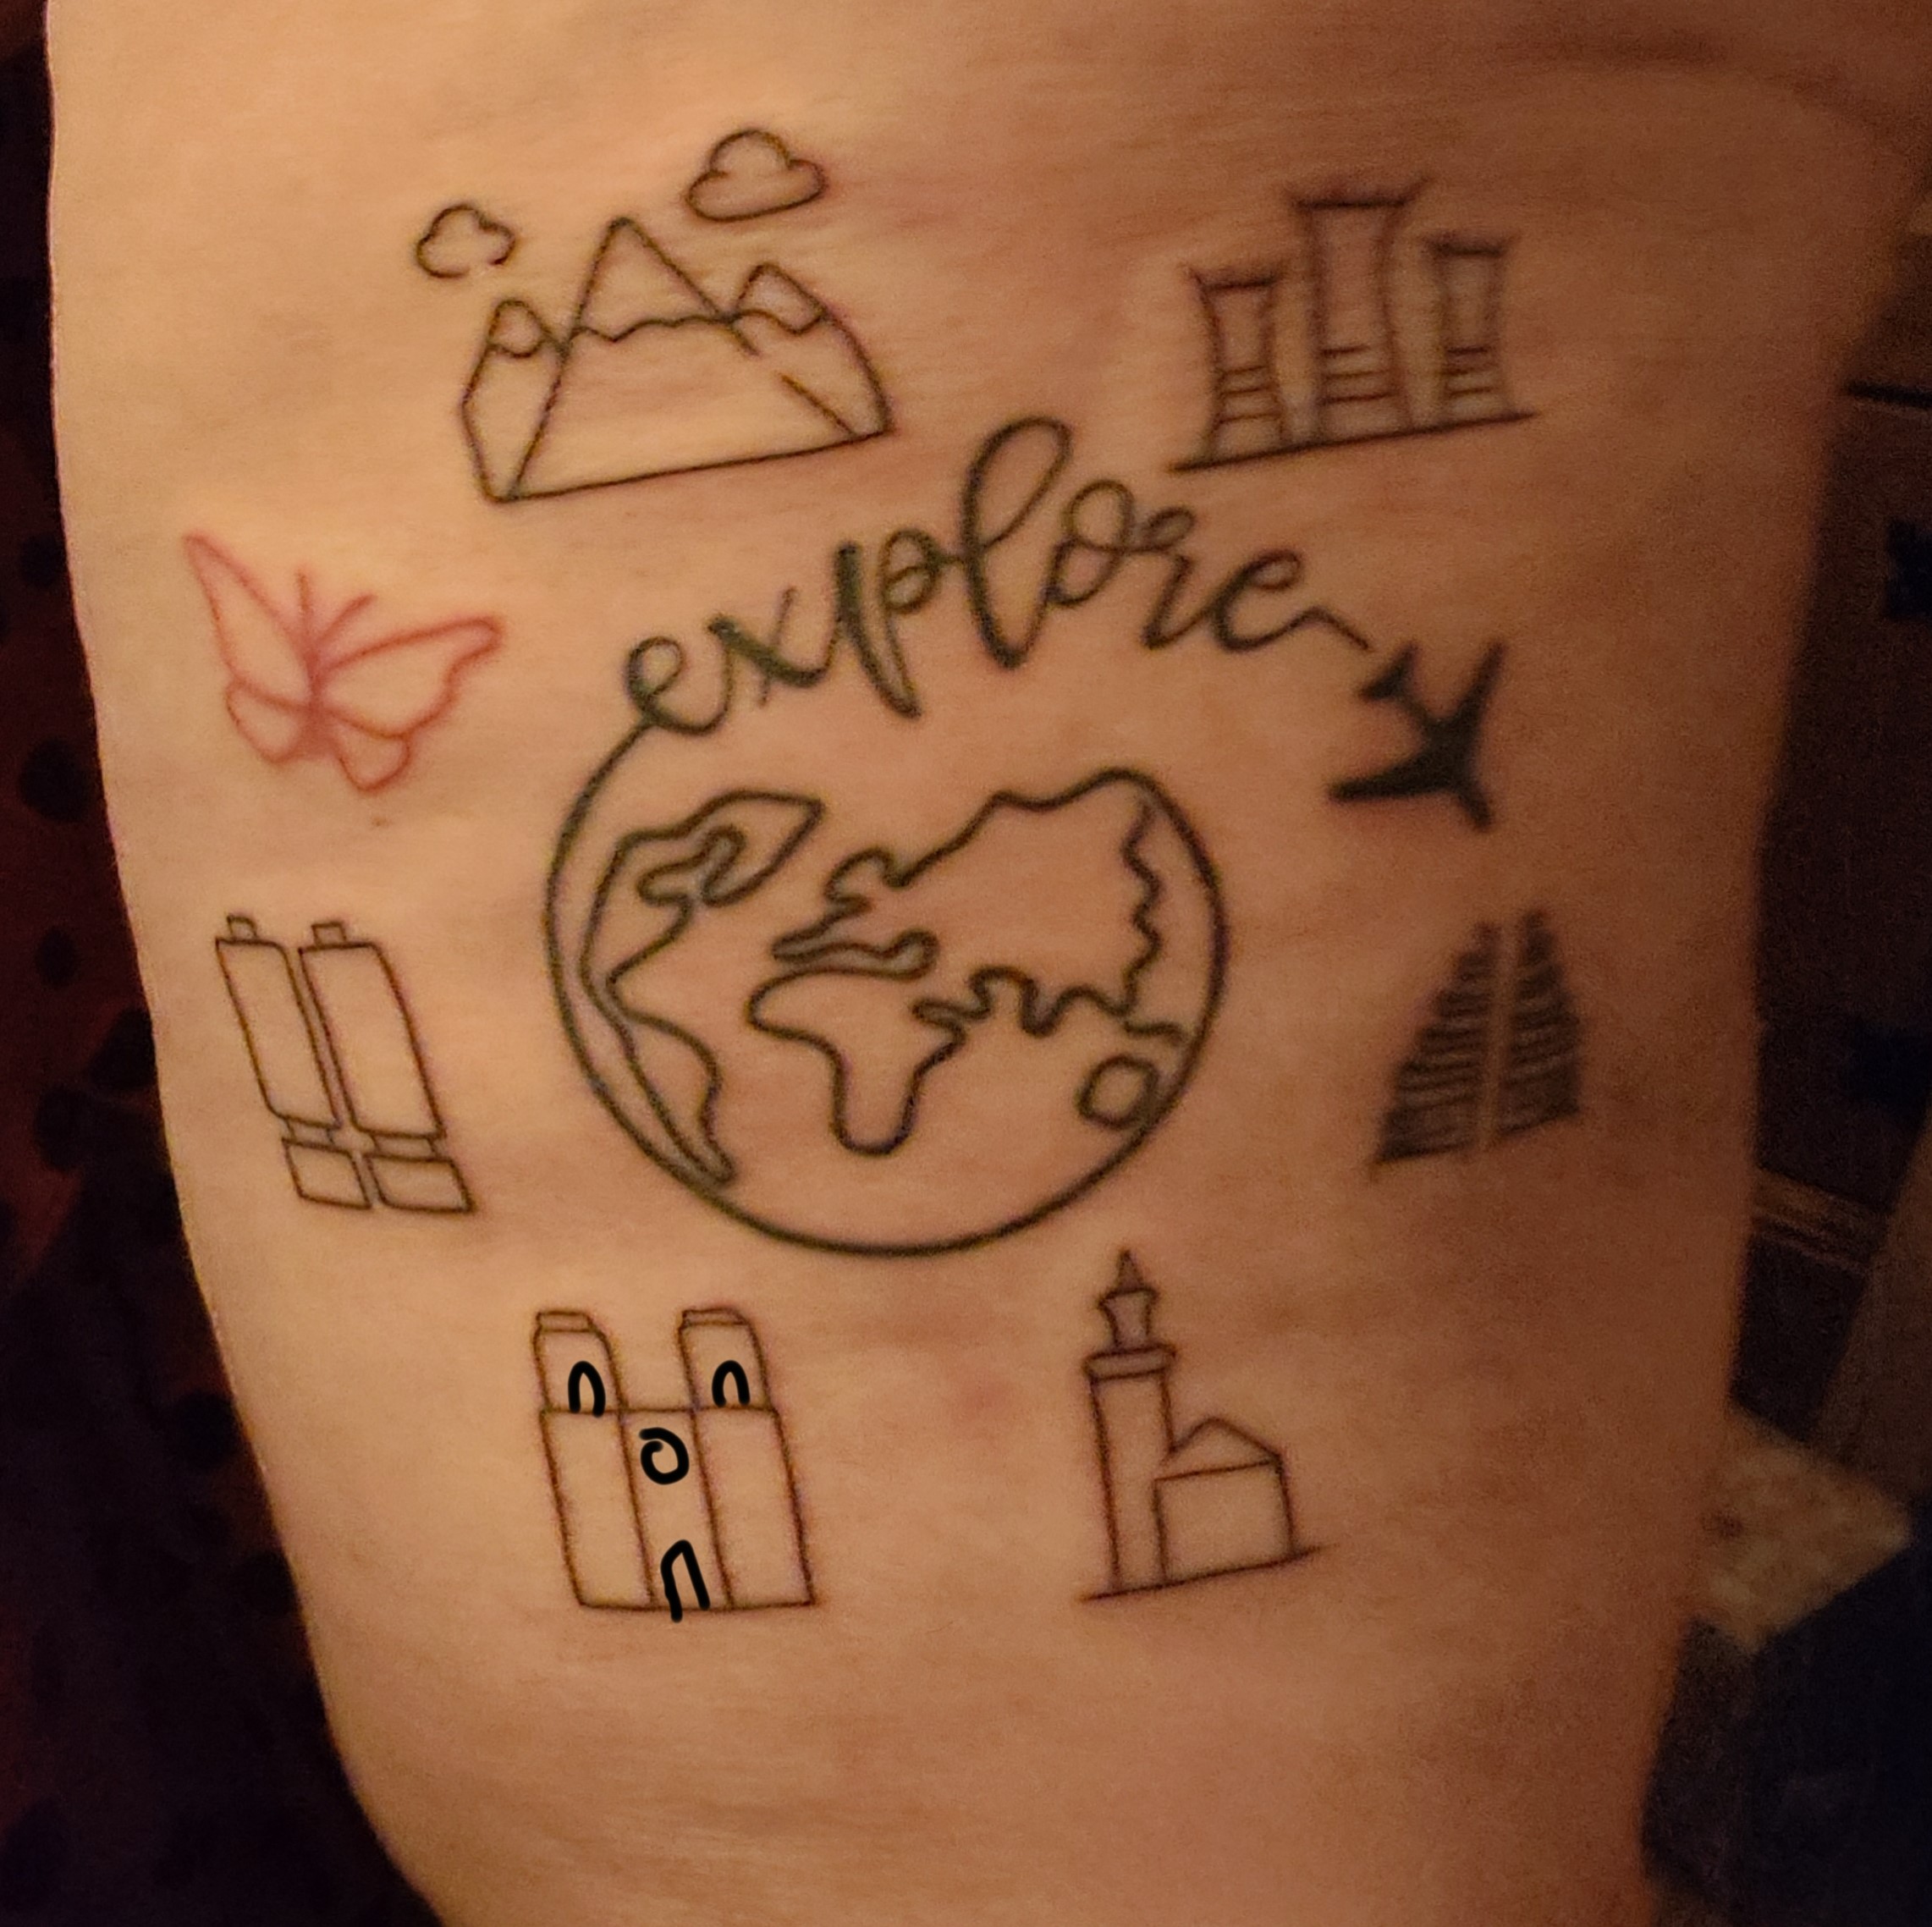 Tattoos, Tattoo, Plus Size Tattoo Owner, Explore, Adventure, Plus Size Adventure, World Traveller, Wheelchair Adventures, Tattoo Lover